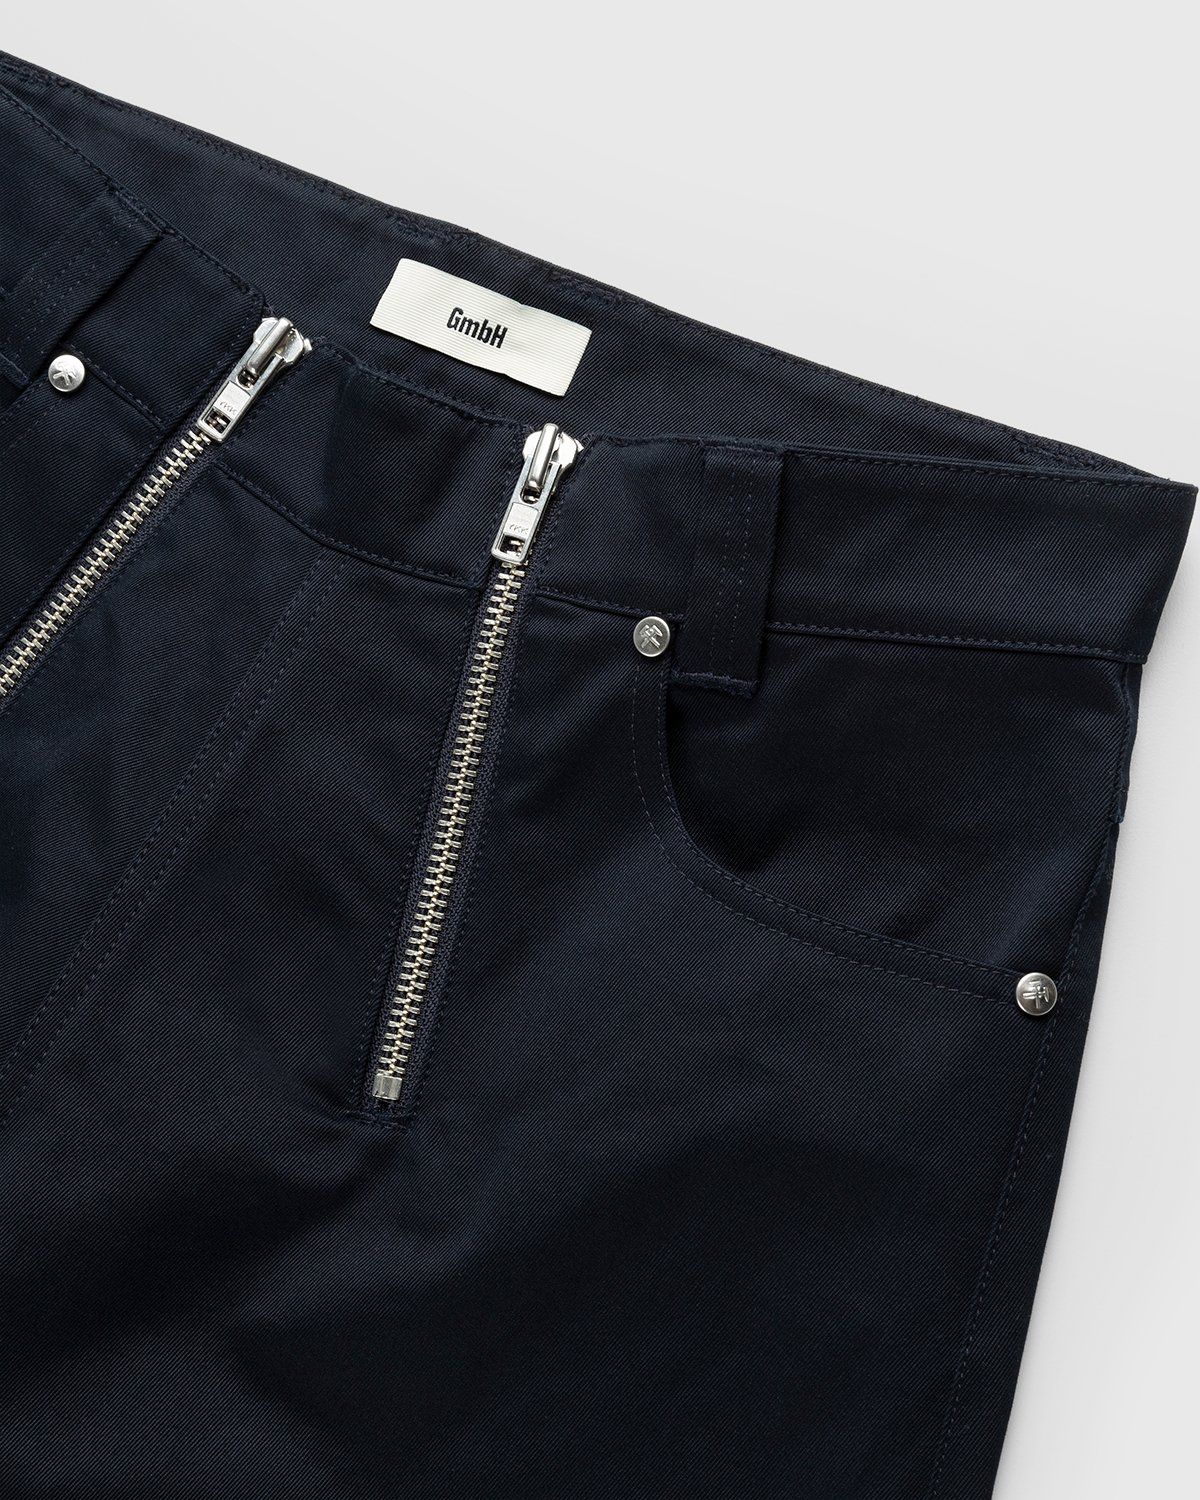 GmbH – Alvan Denim Trousers Navy - Pants - Blue - Image 5